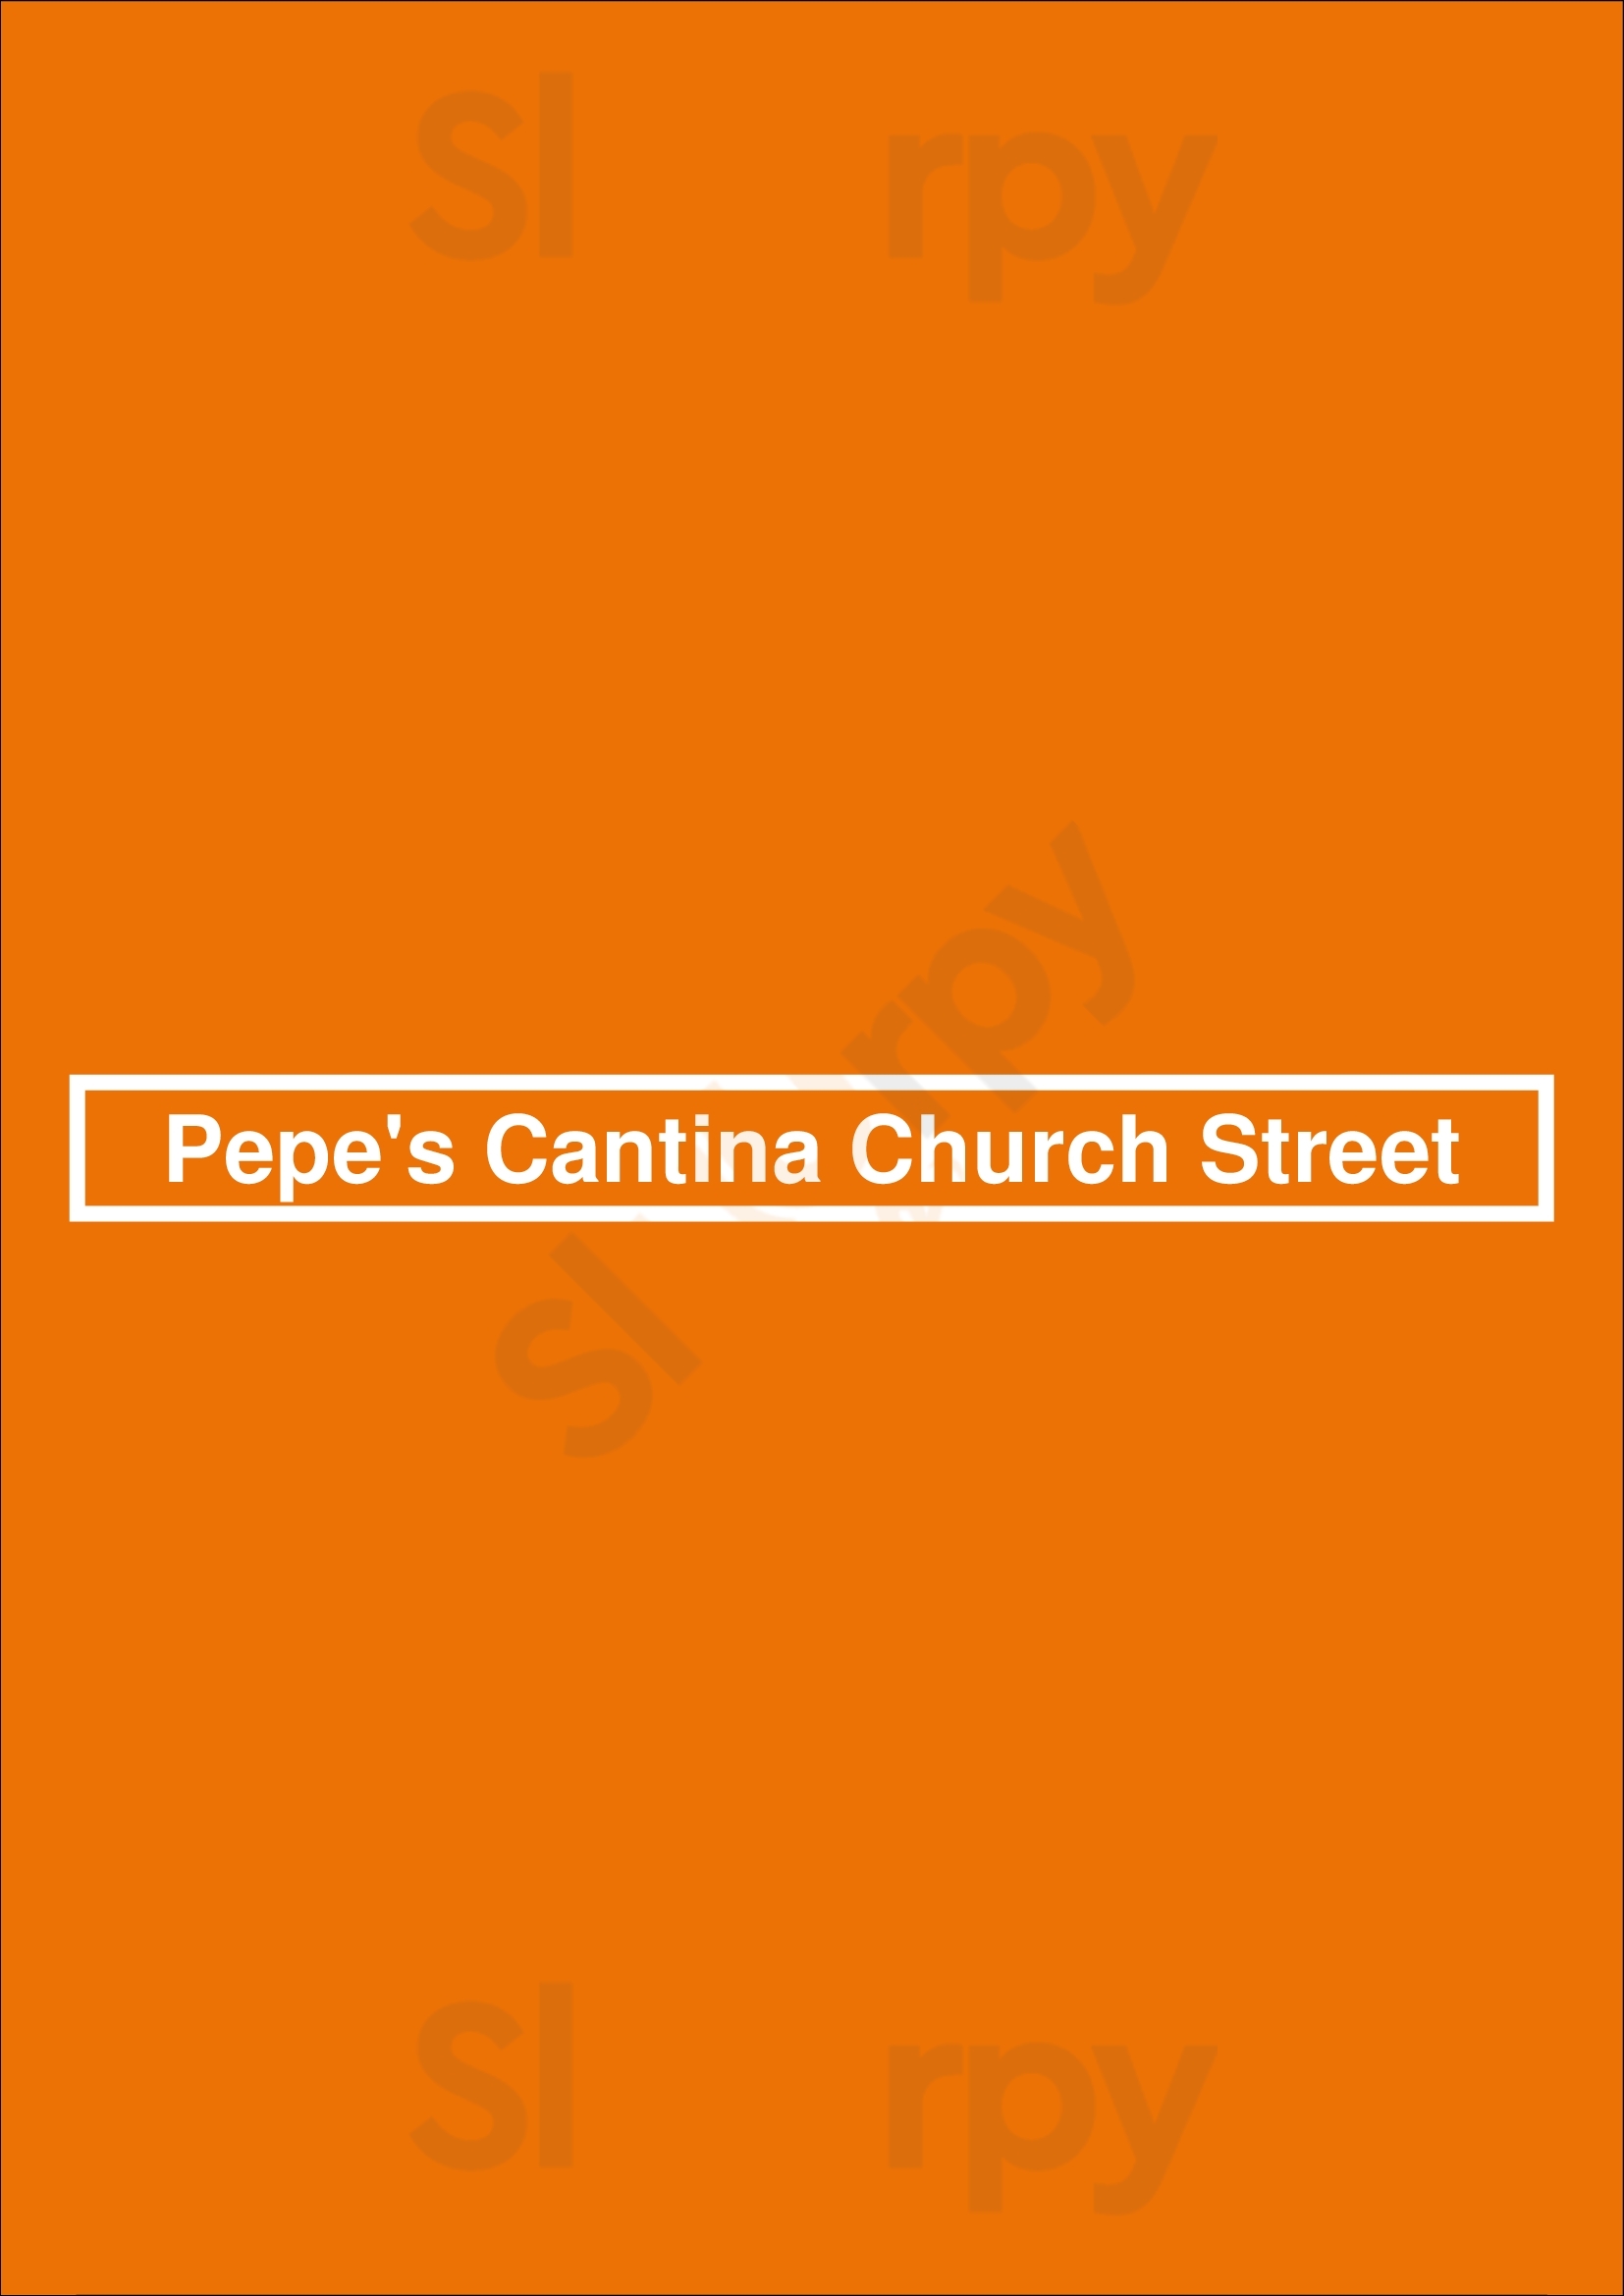 Pepe's Cantina Church Street Orlando Menu - 1